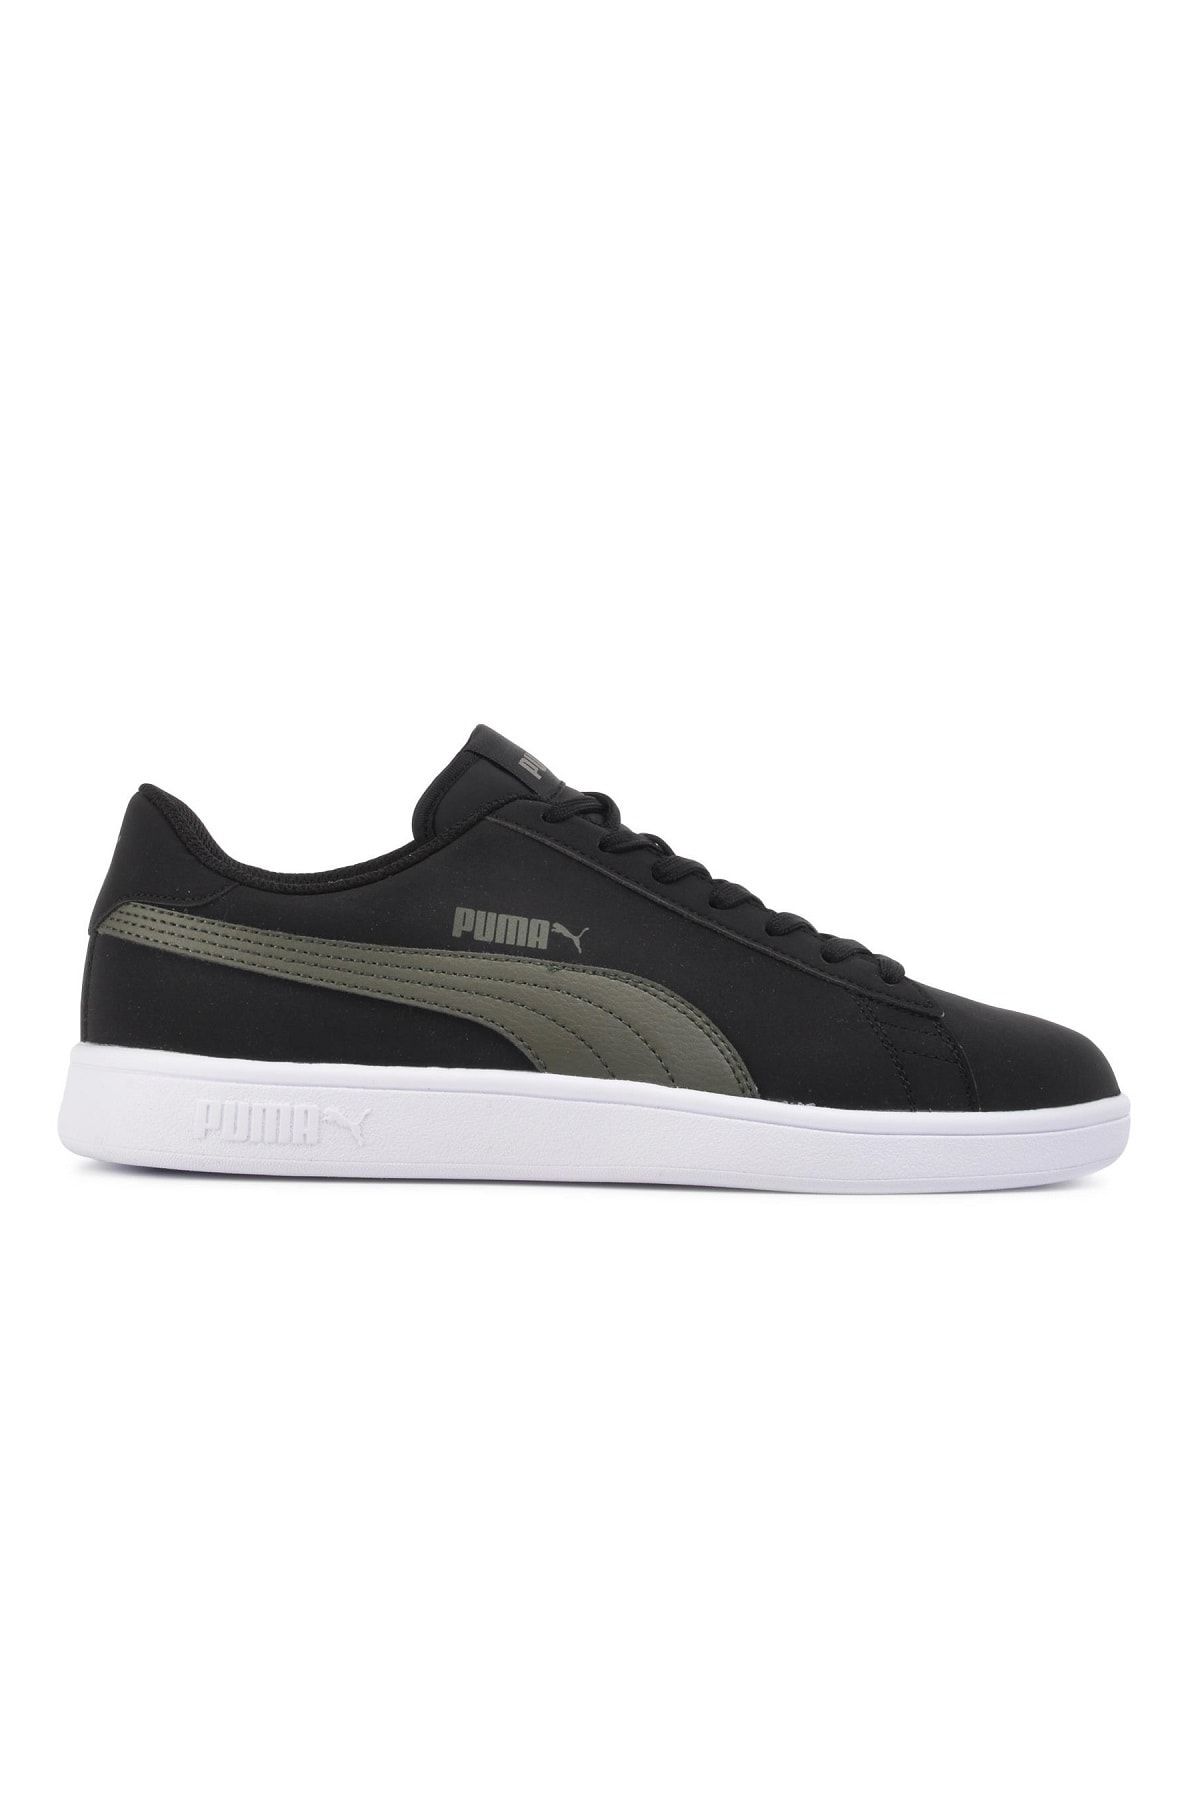 Puma SMASH BUCK V2 TDP Siyah Erkek Sneaker Ayakkabı 101085507